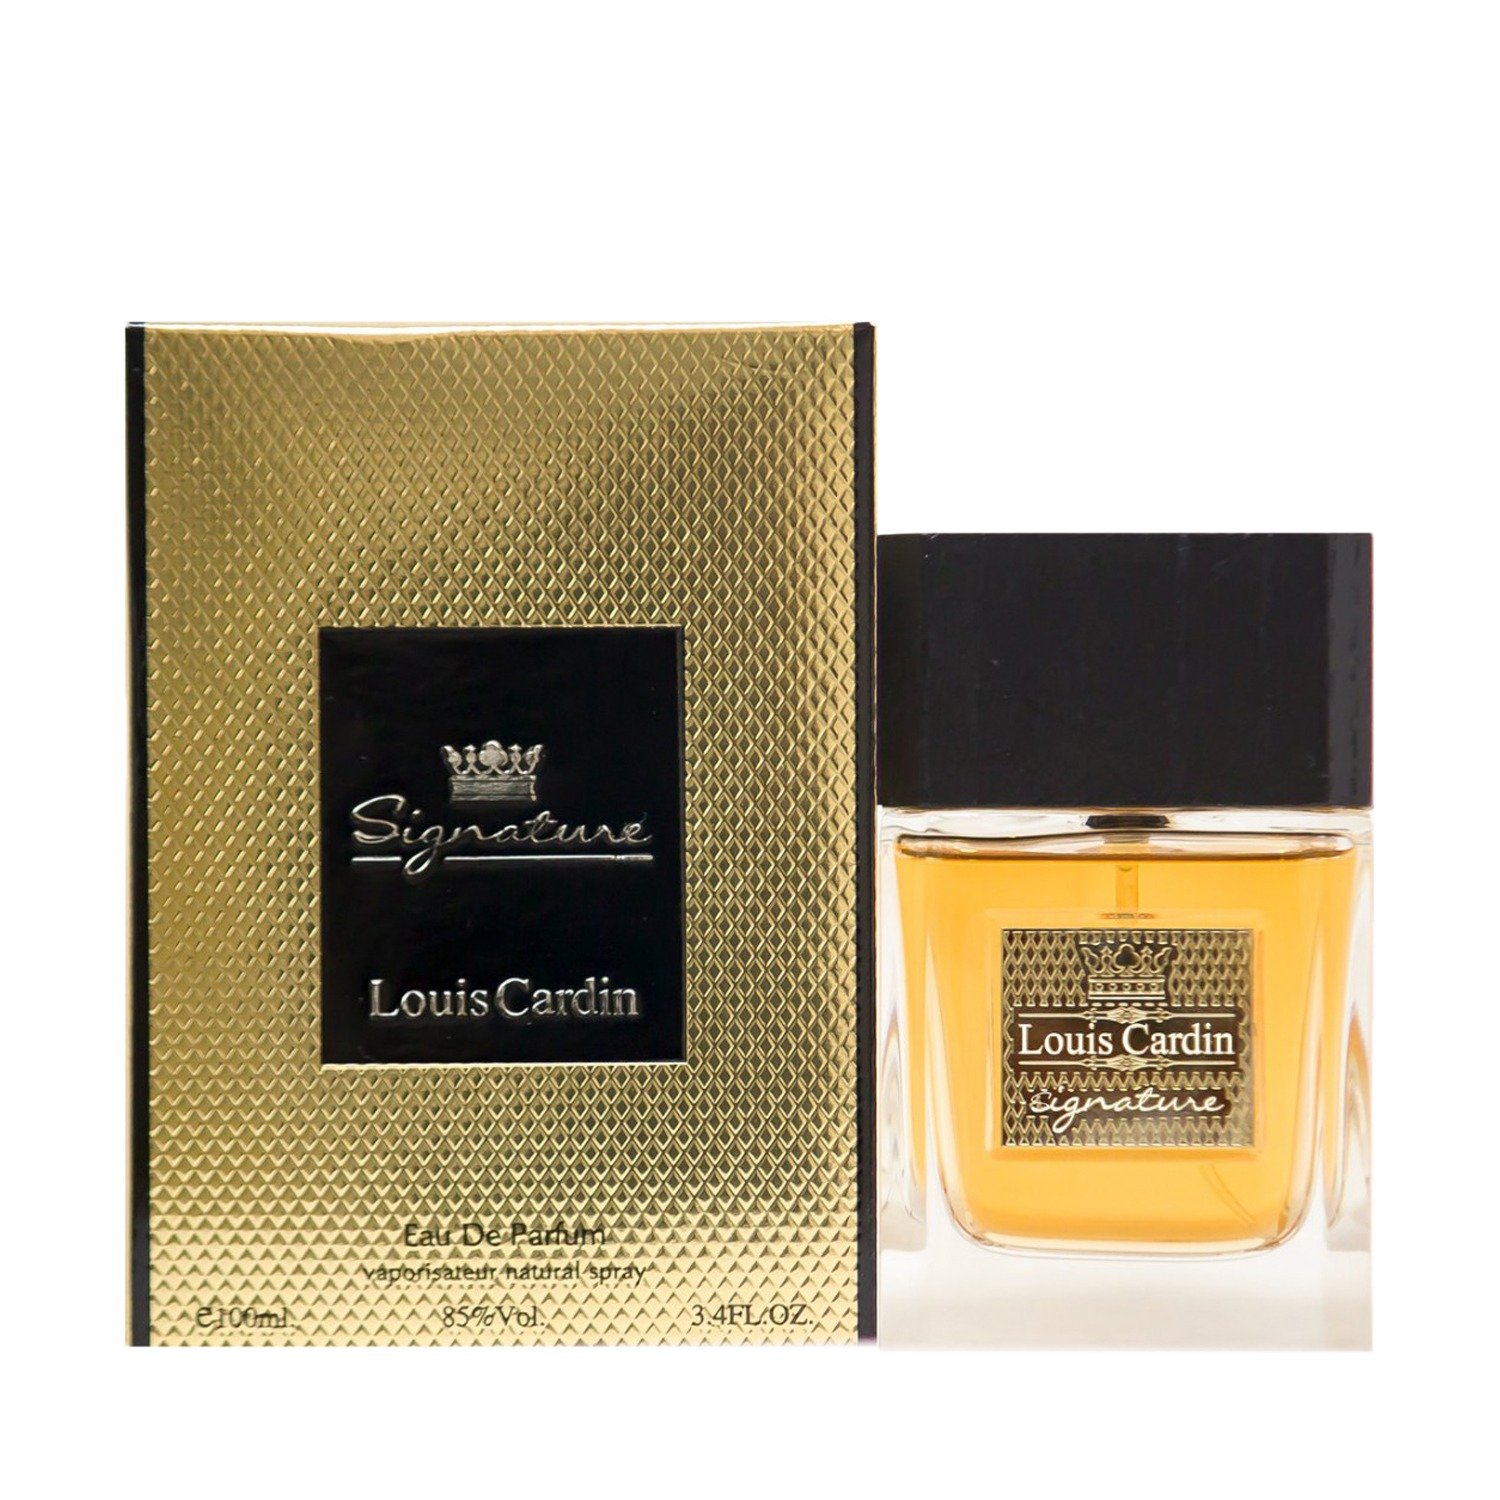 Louis Cardin Sacred, Best Cheap Fragrance? 2 minute fragrance